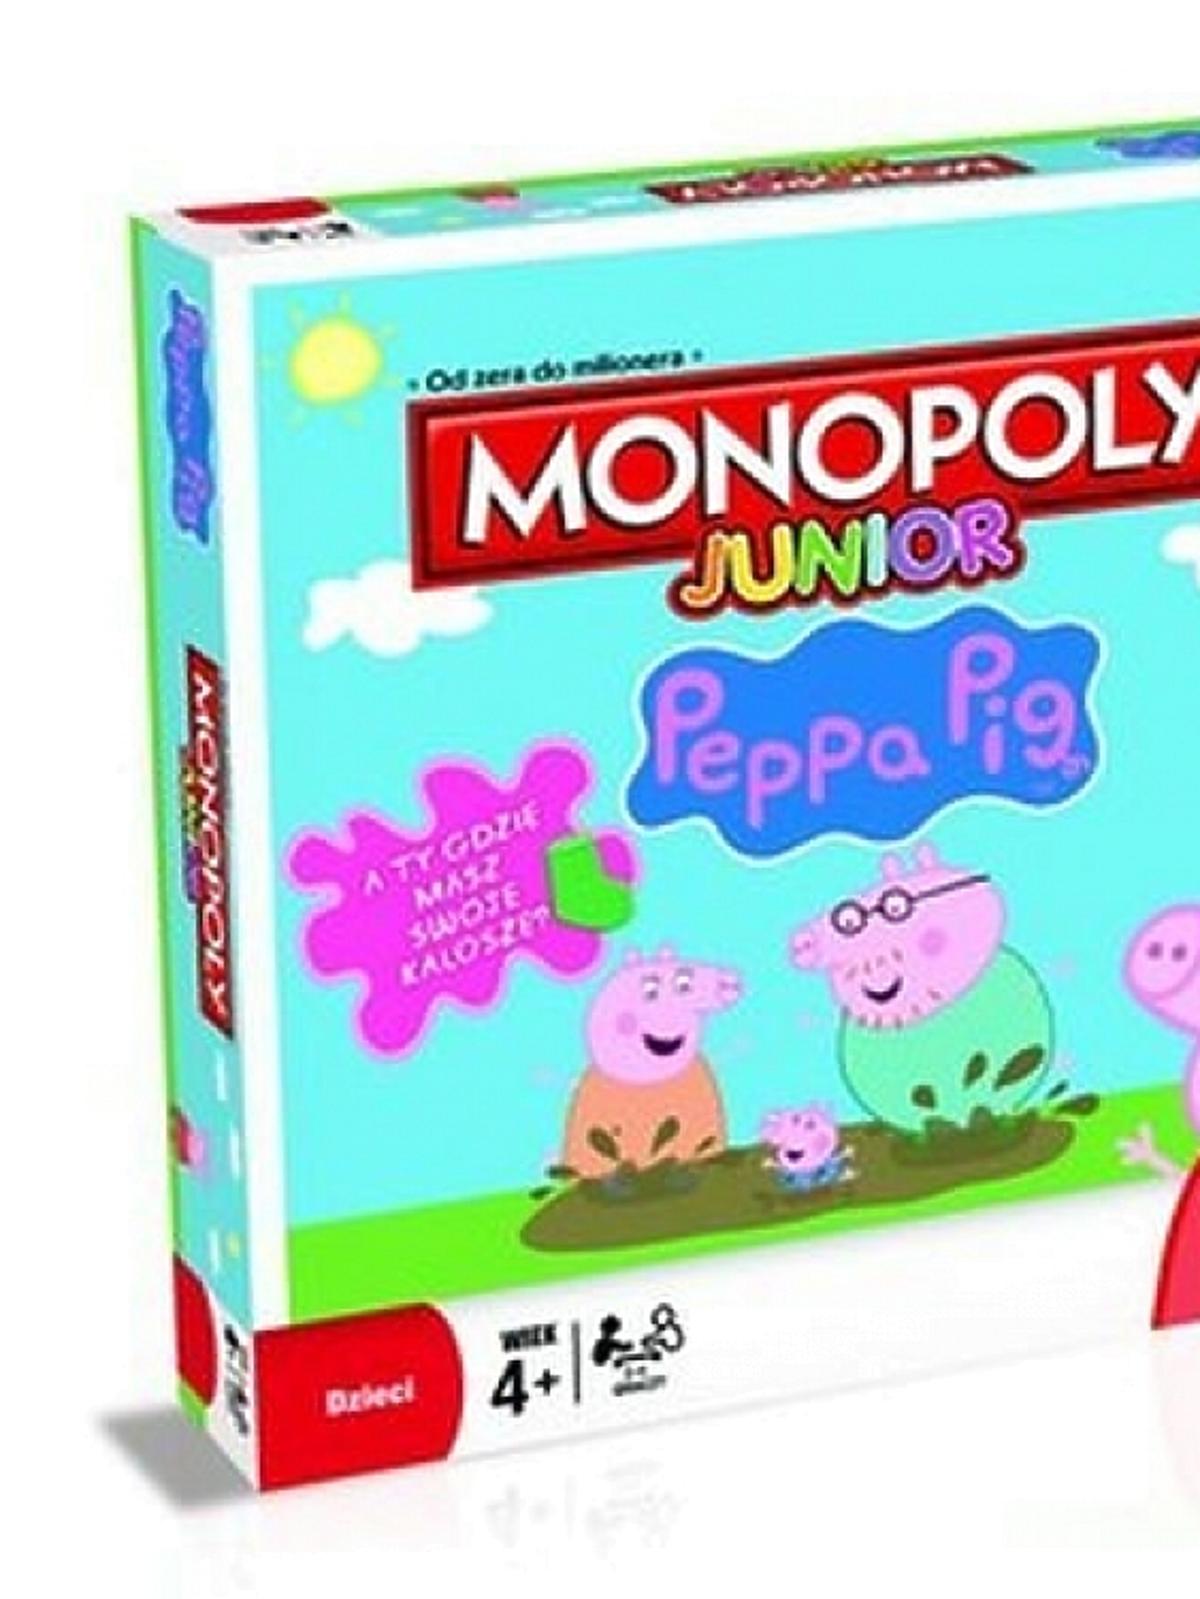  monopoly ze świnką peppą.jpeg